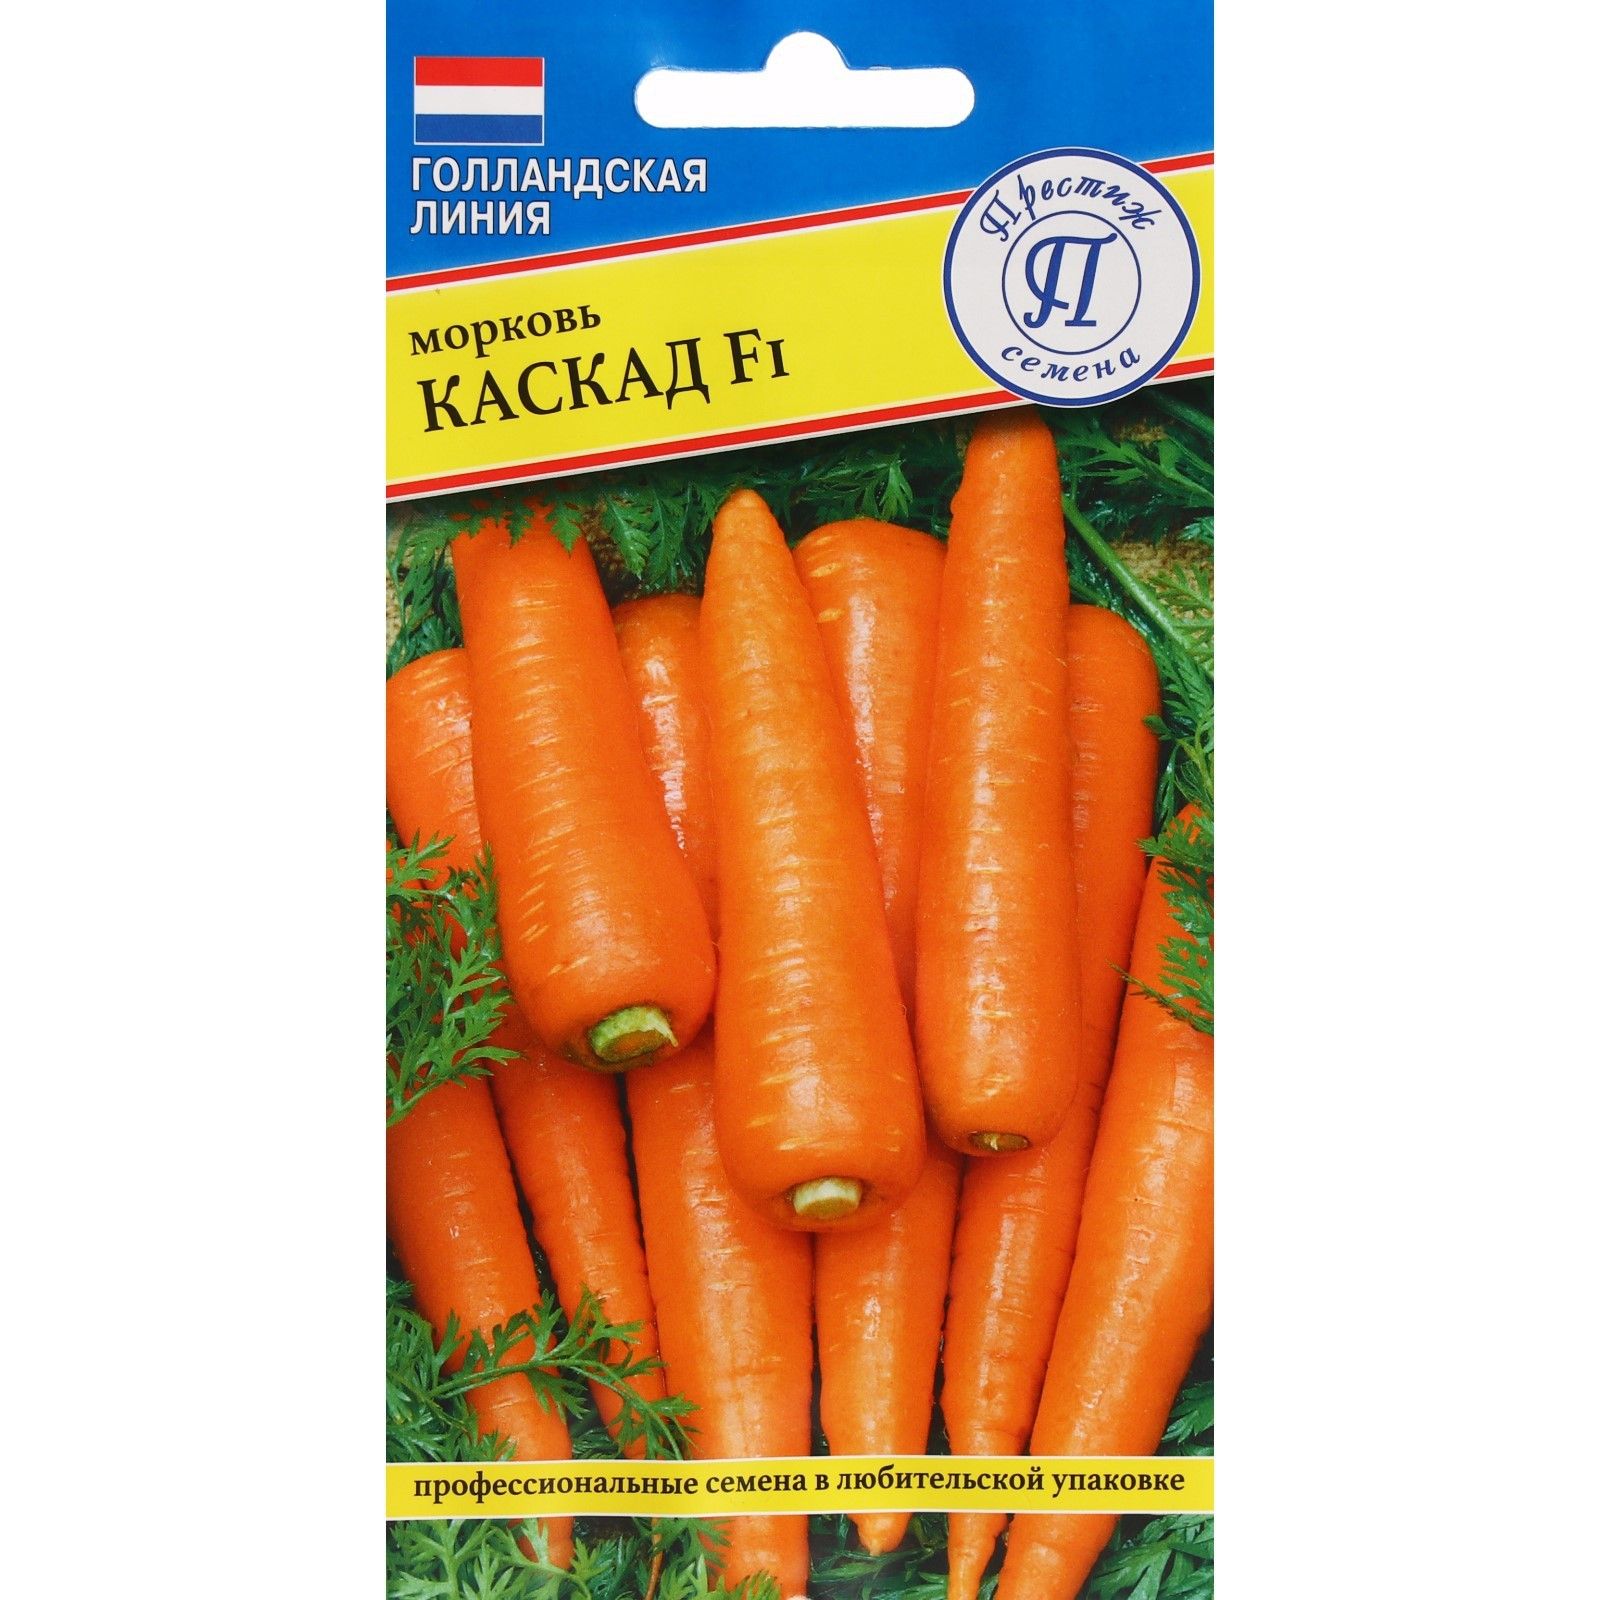 Морковь Каскад f1